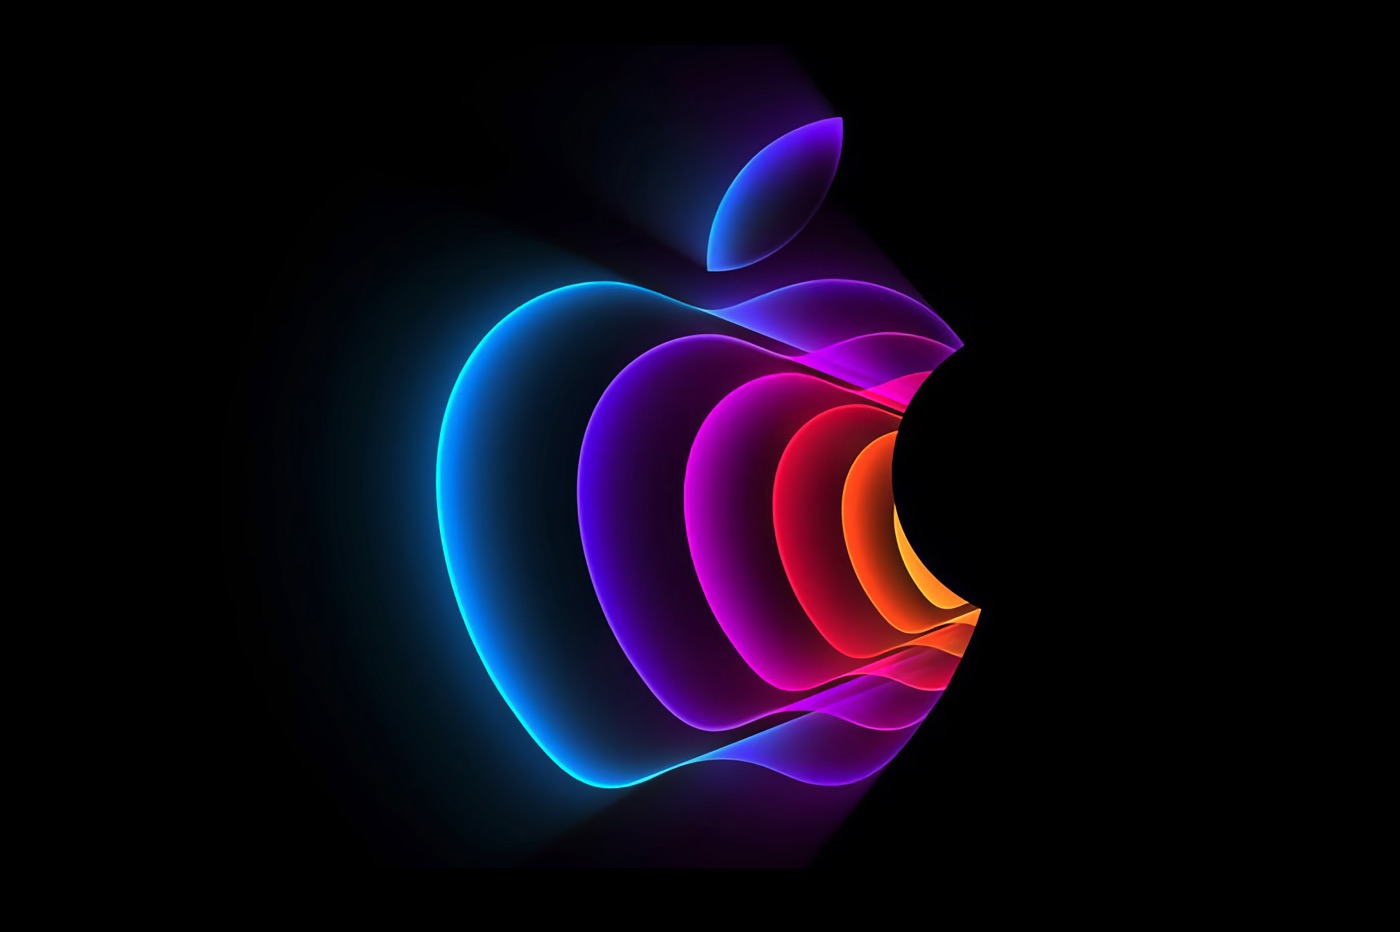 Multi-colored apple logo on black background